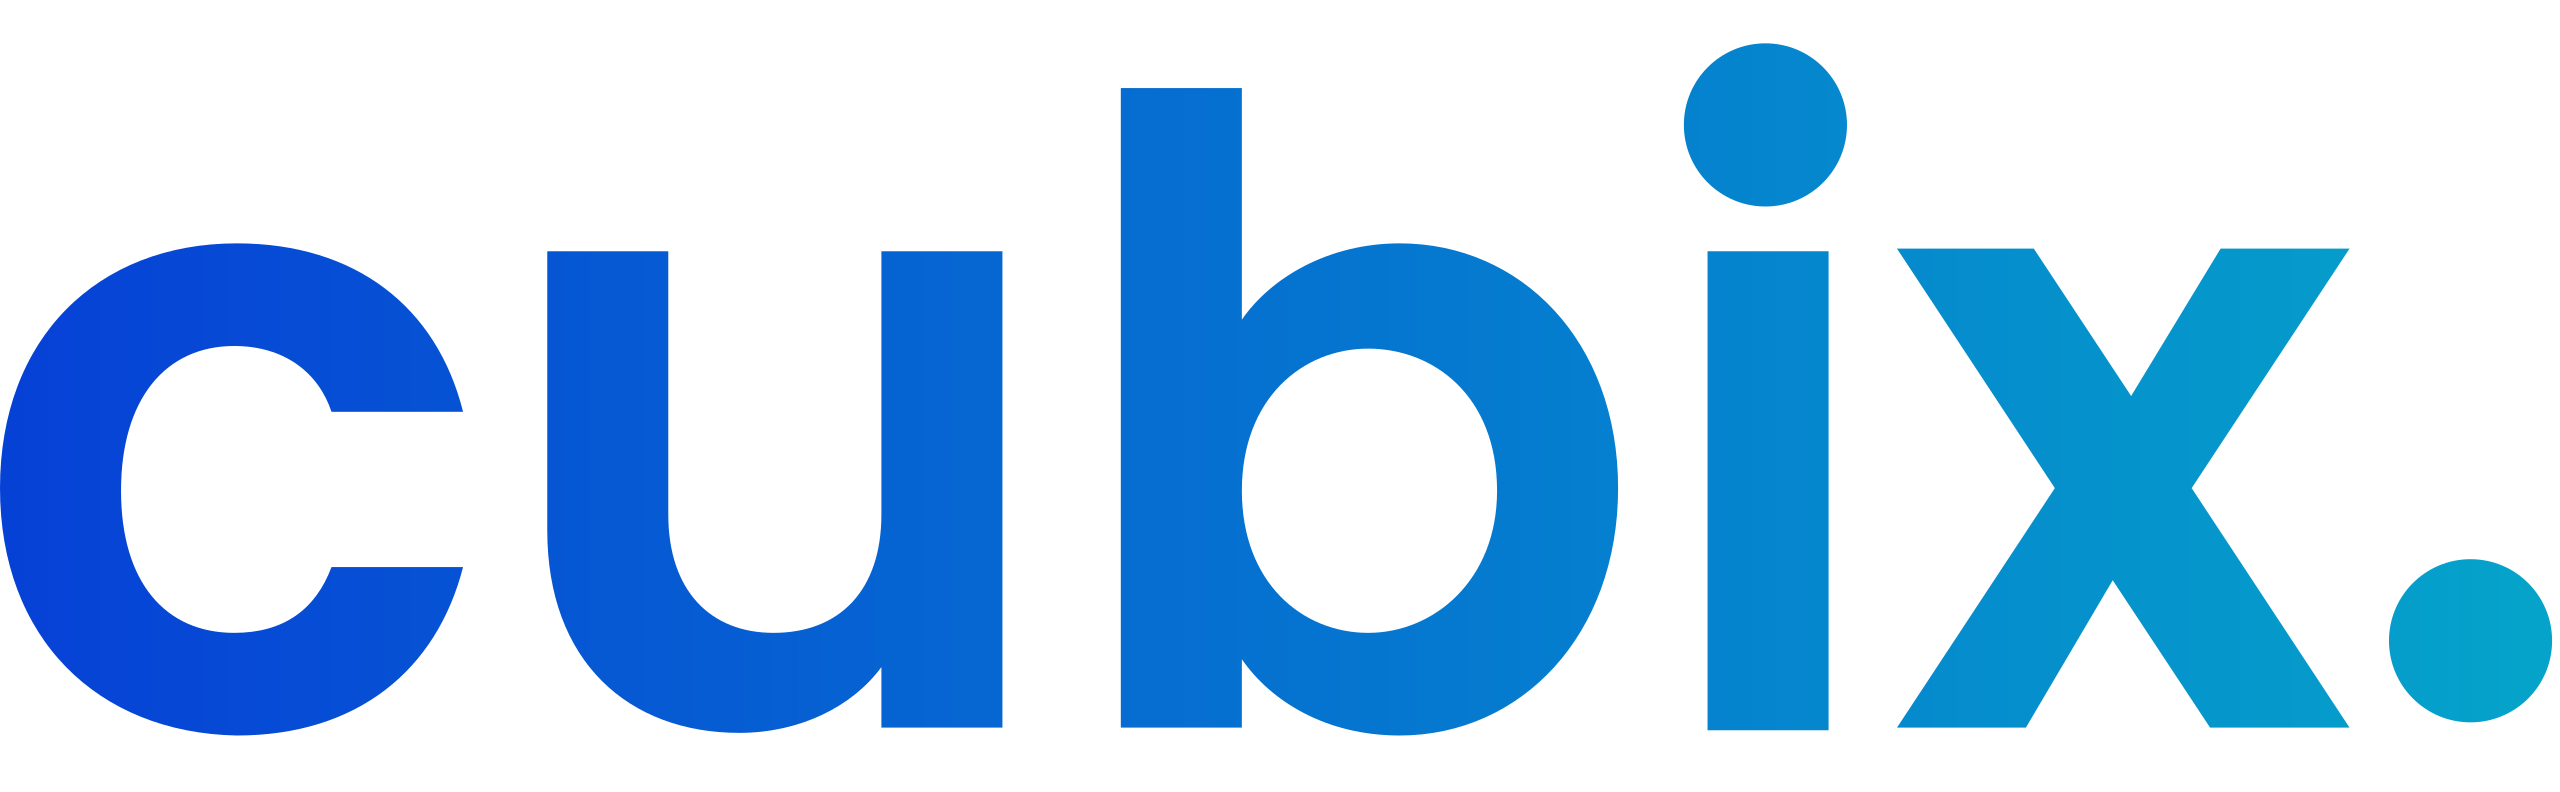 Cubix logo